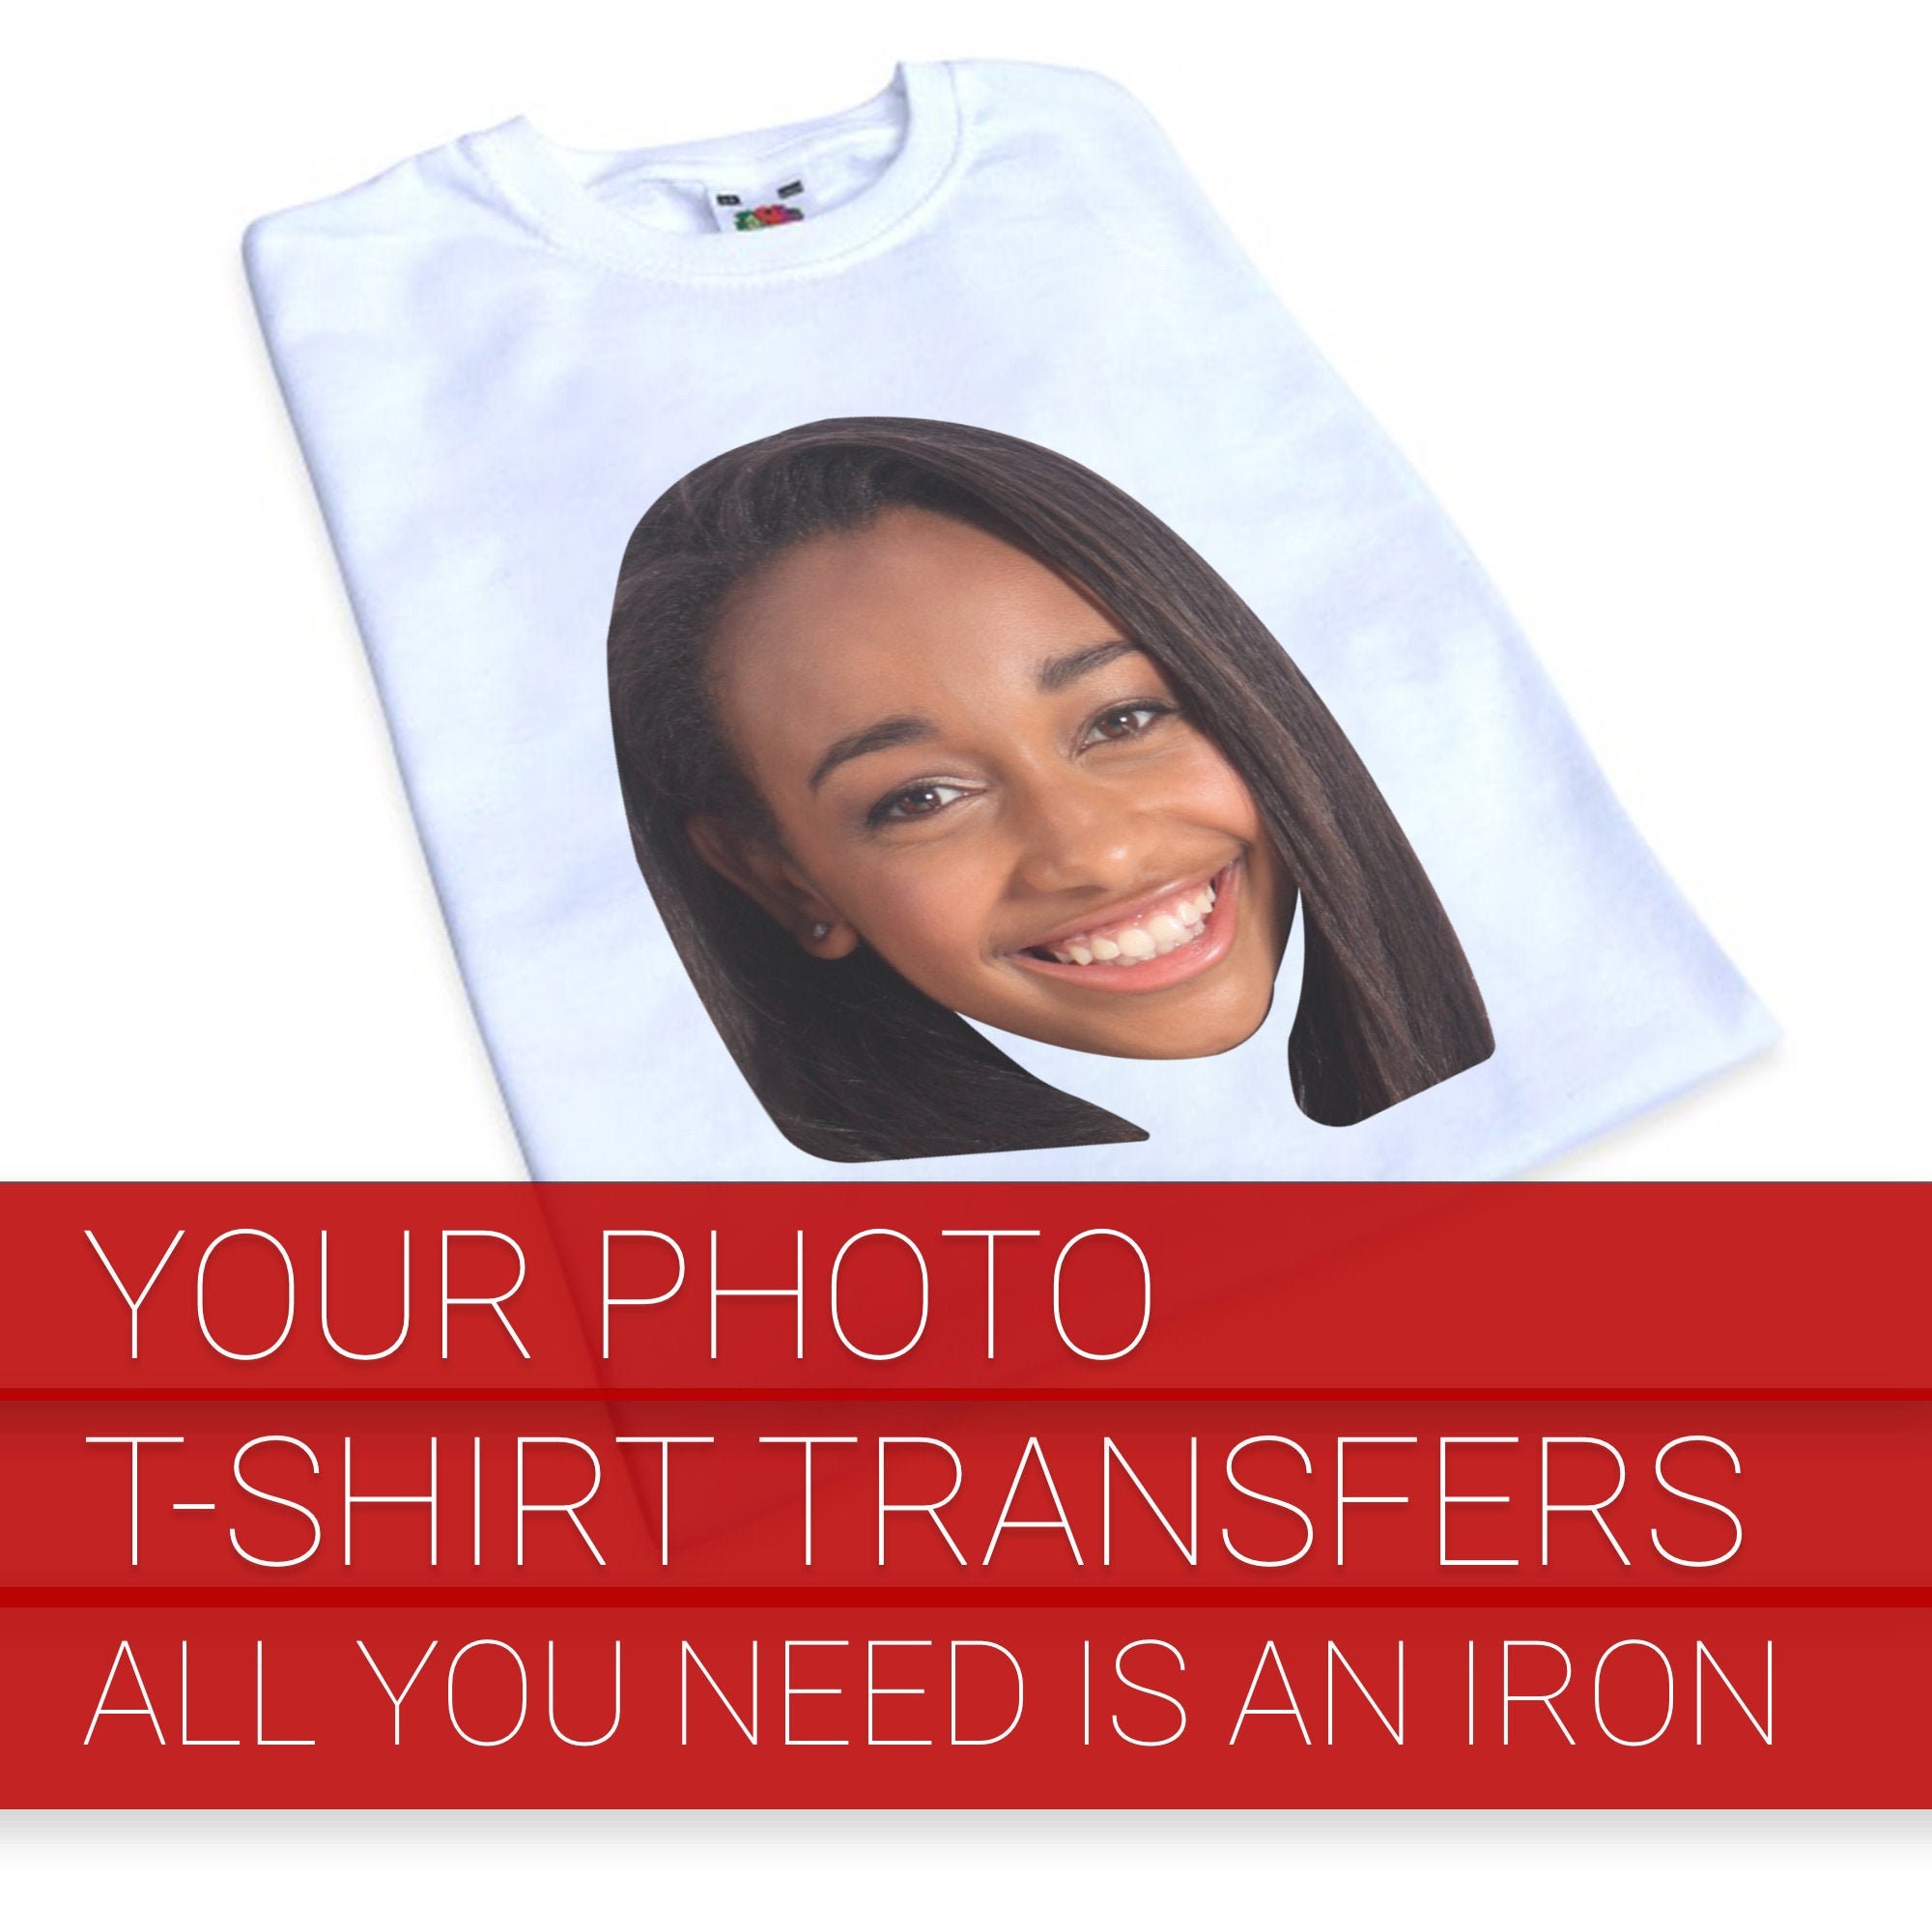 Custom Iron on Full Colour Vinyl Transfers T-shirt Printing Ready